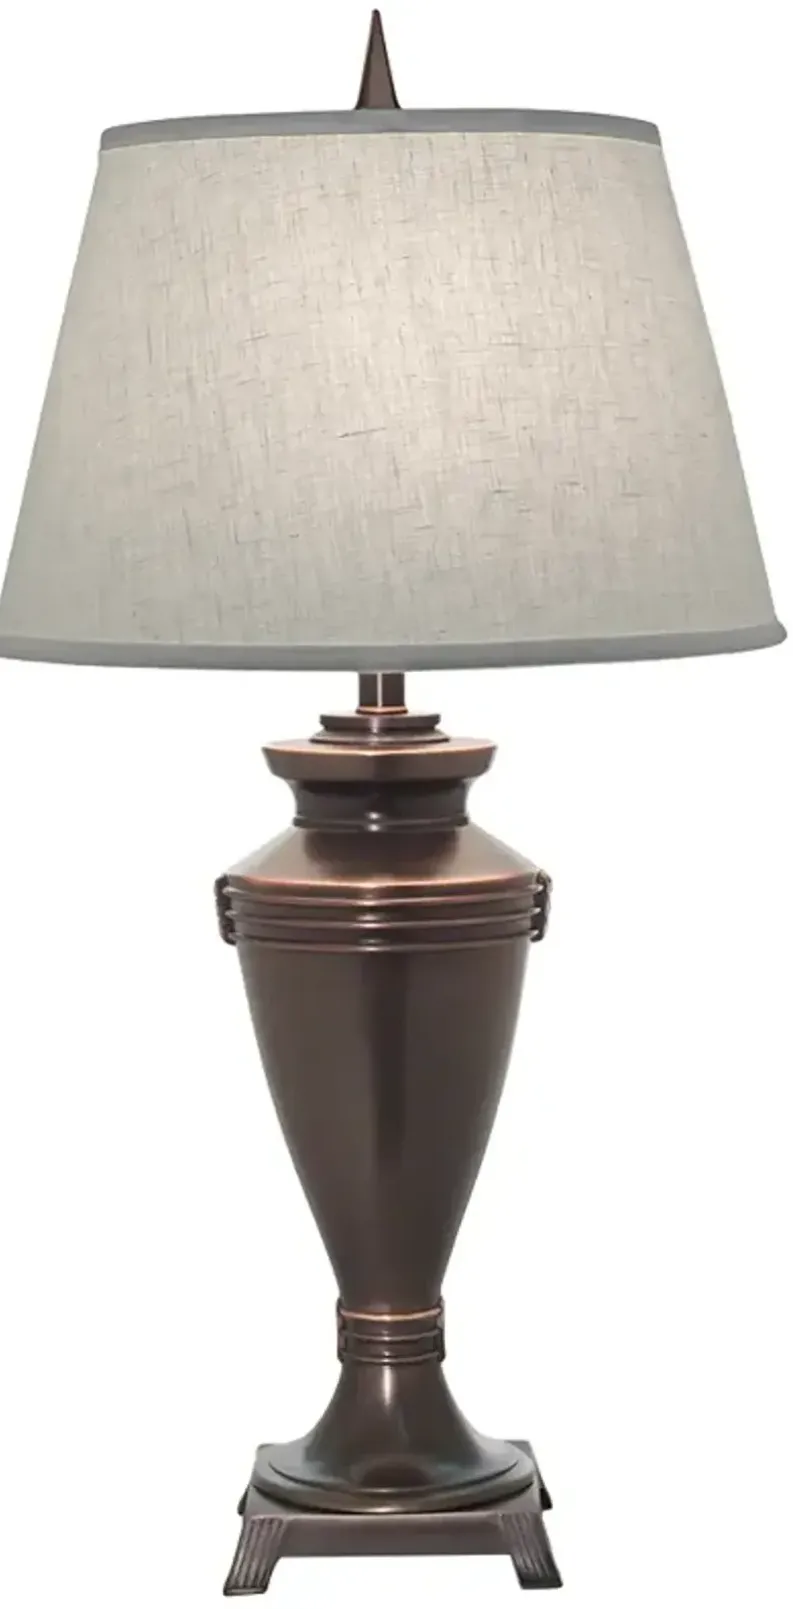 Keyton Oxidized Bronze Table Lamp